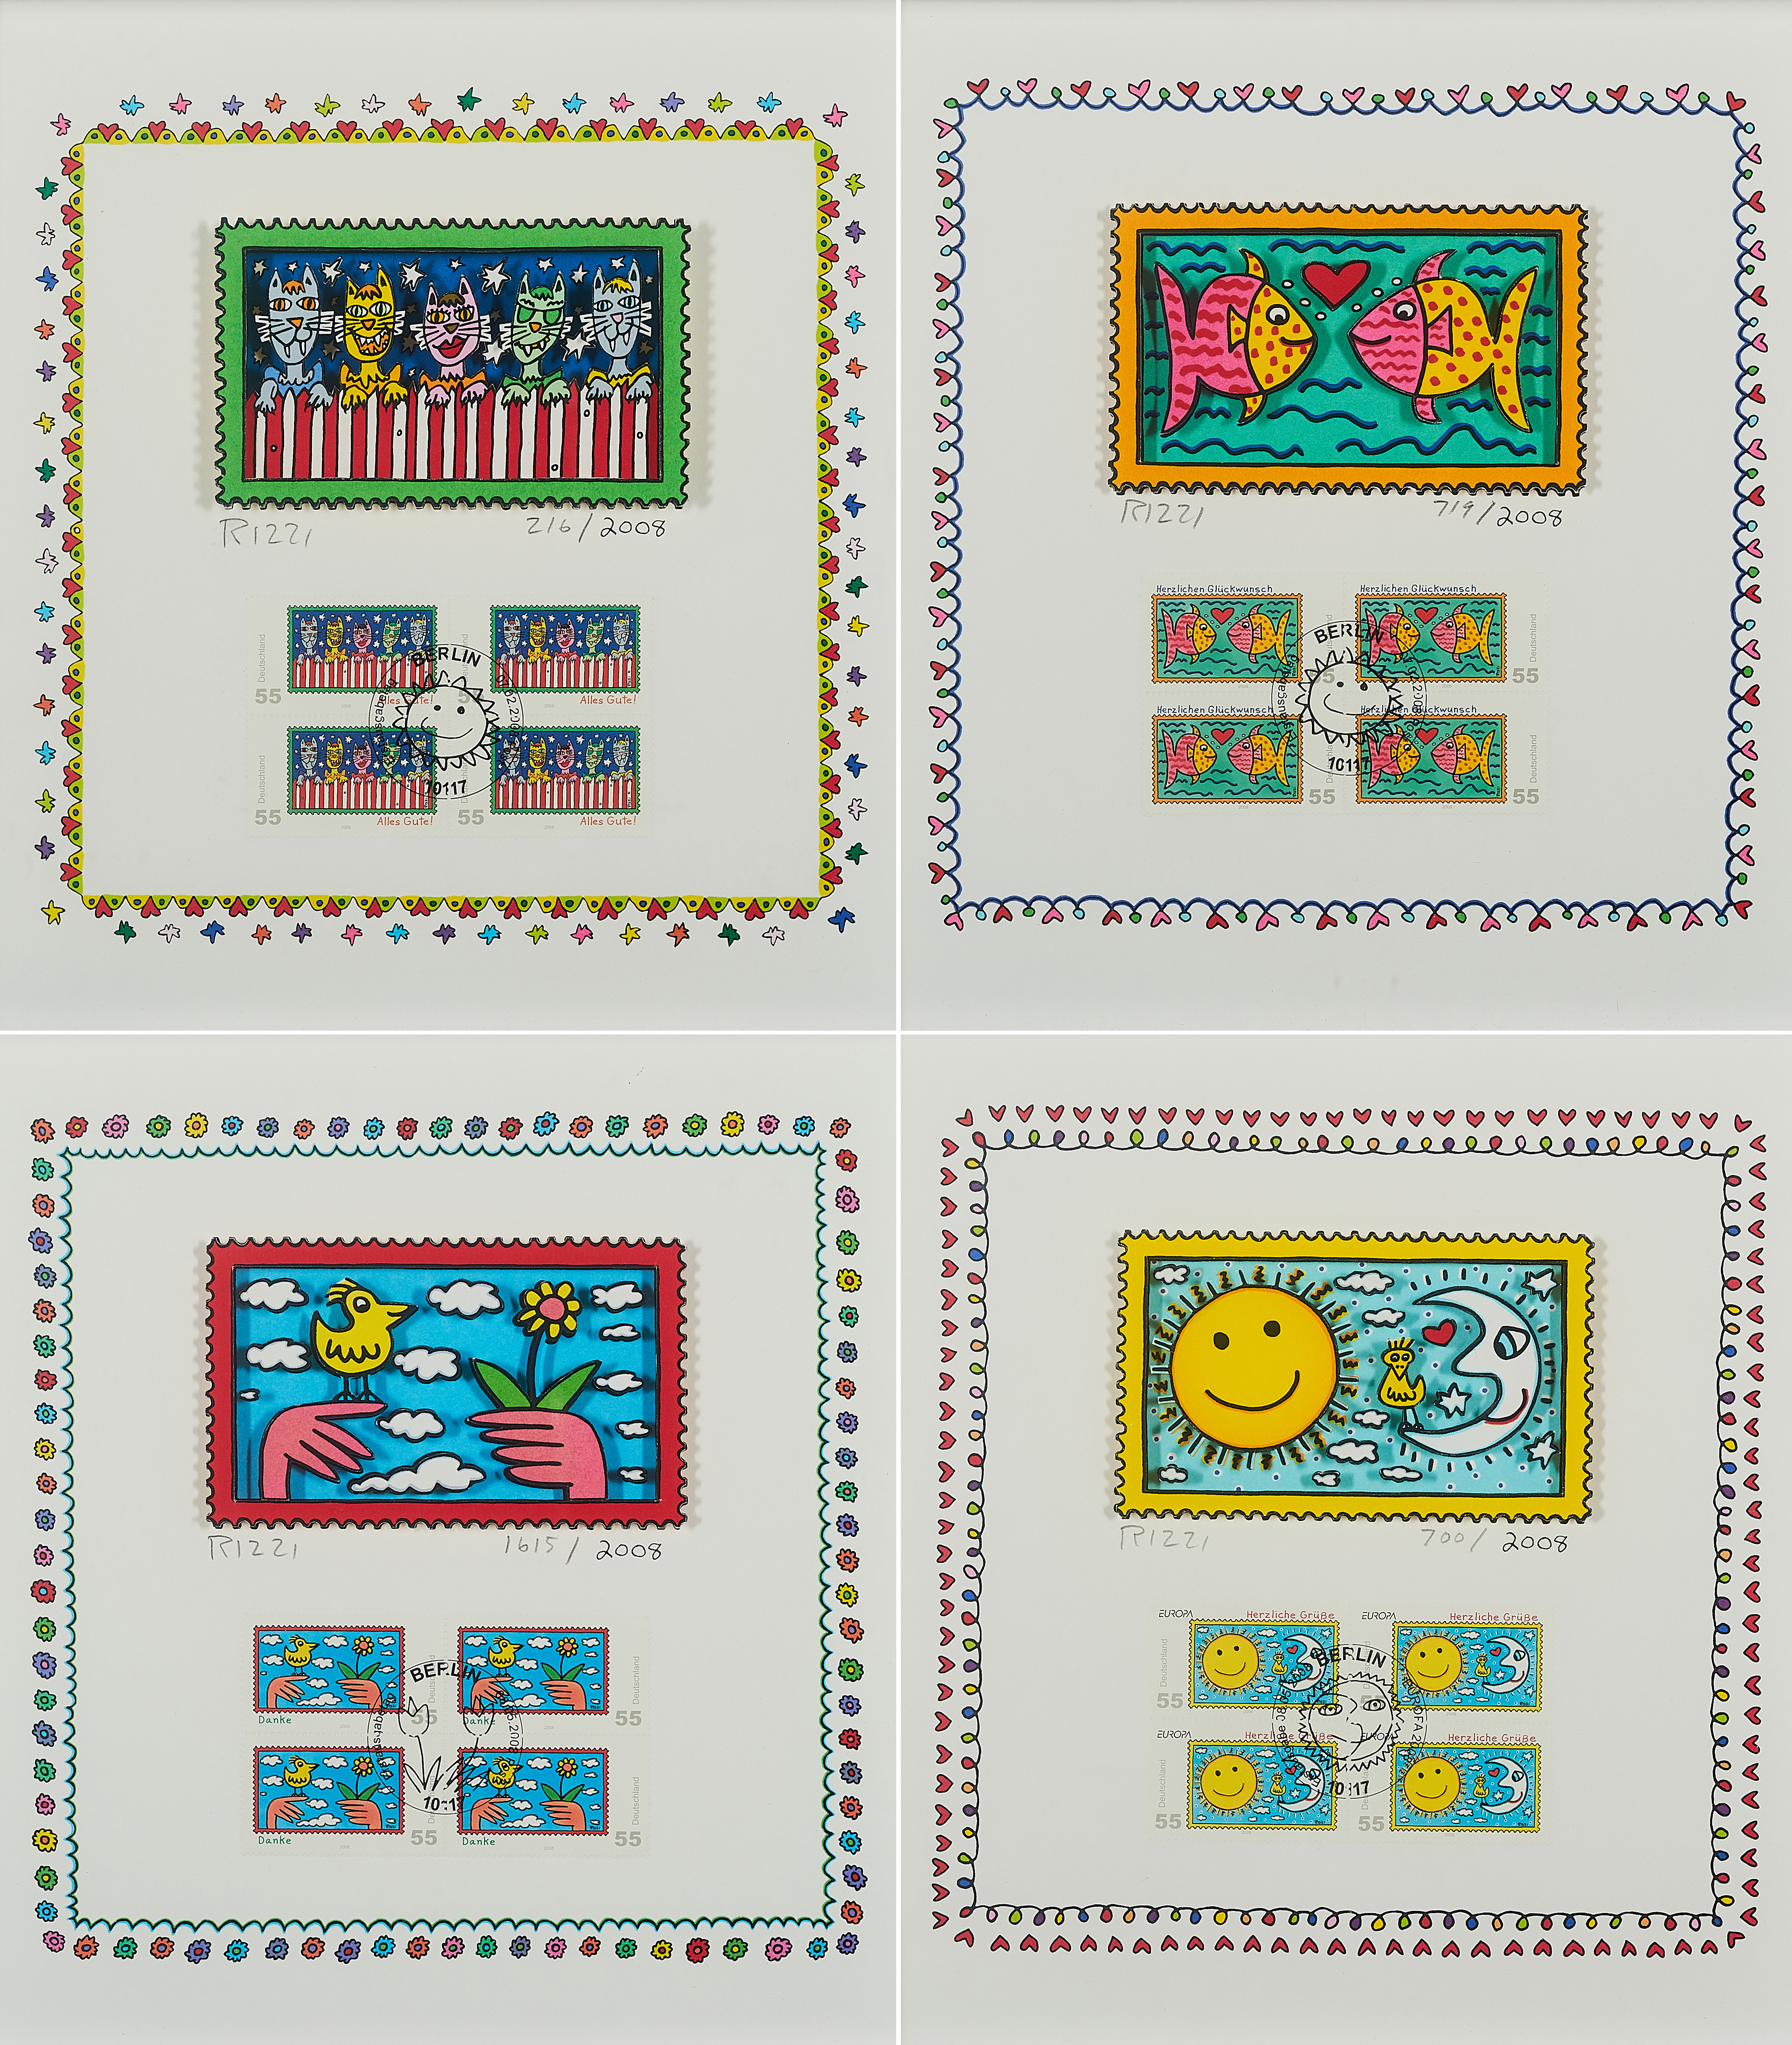 James Rizzi - Rizzi Stamps 4-teiliges Briefmarkenset, 69485-14, Van Ham Kunstauktionen